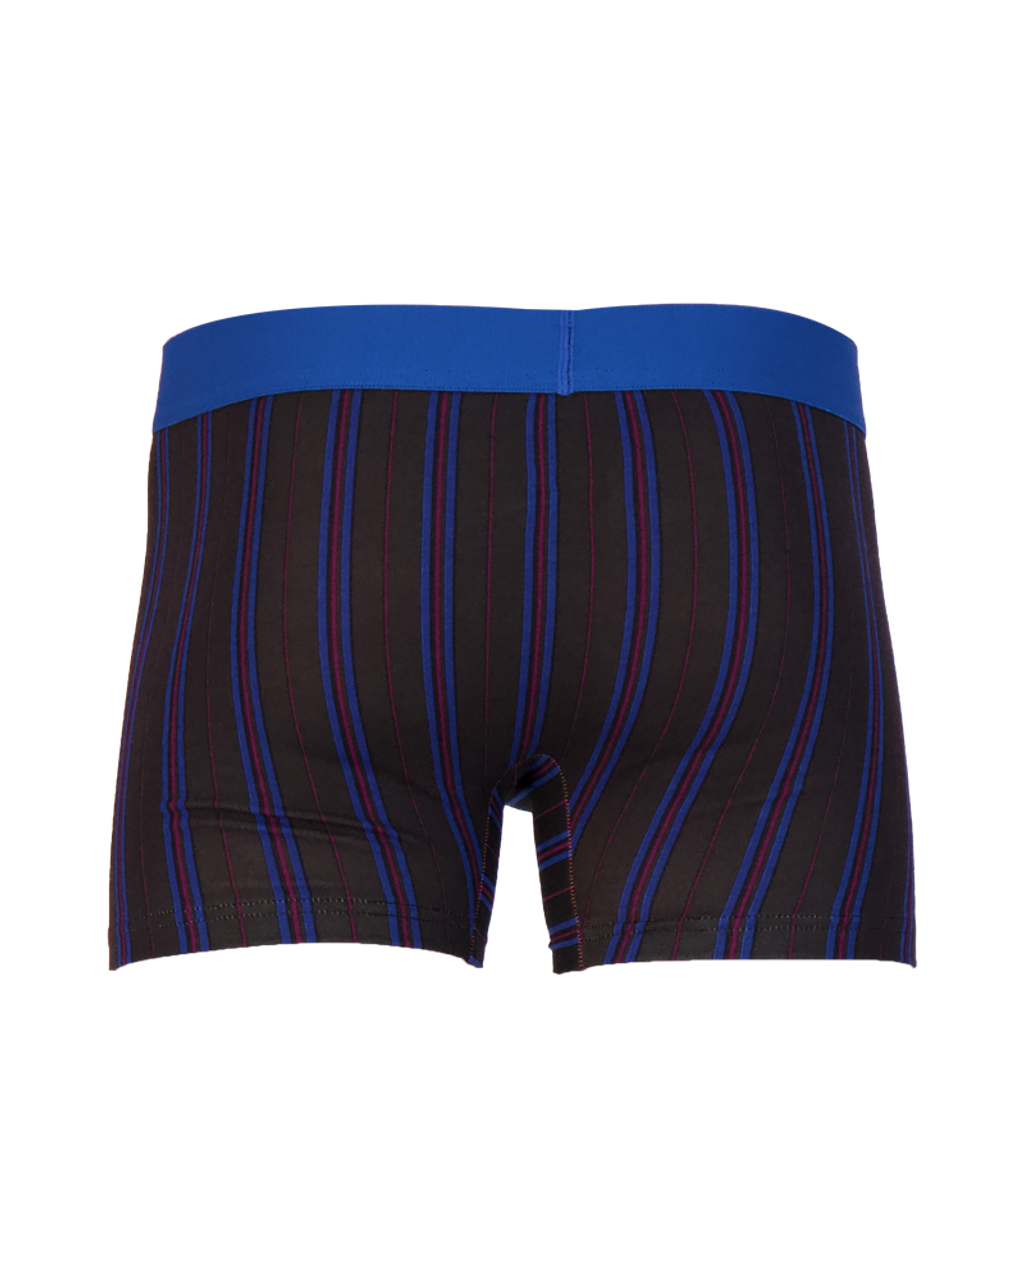 Boxer Brief w/ Fly in Triple Threat Stripe by Wood Underwear